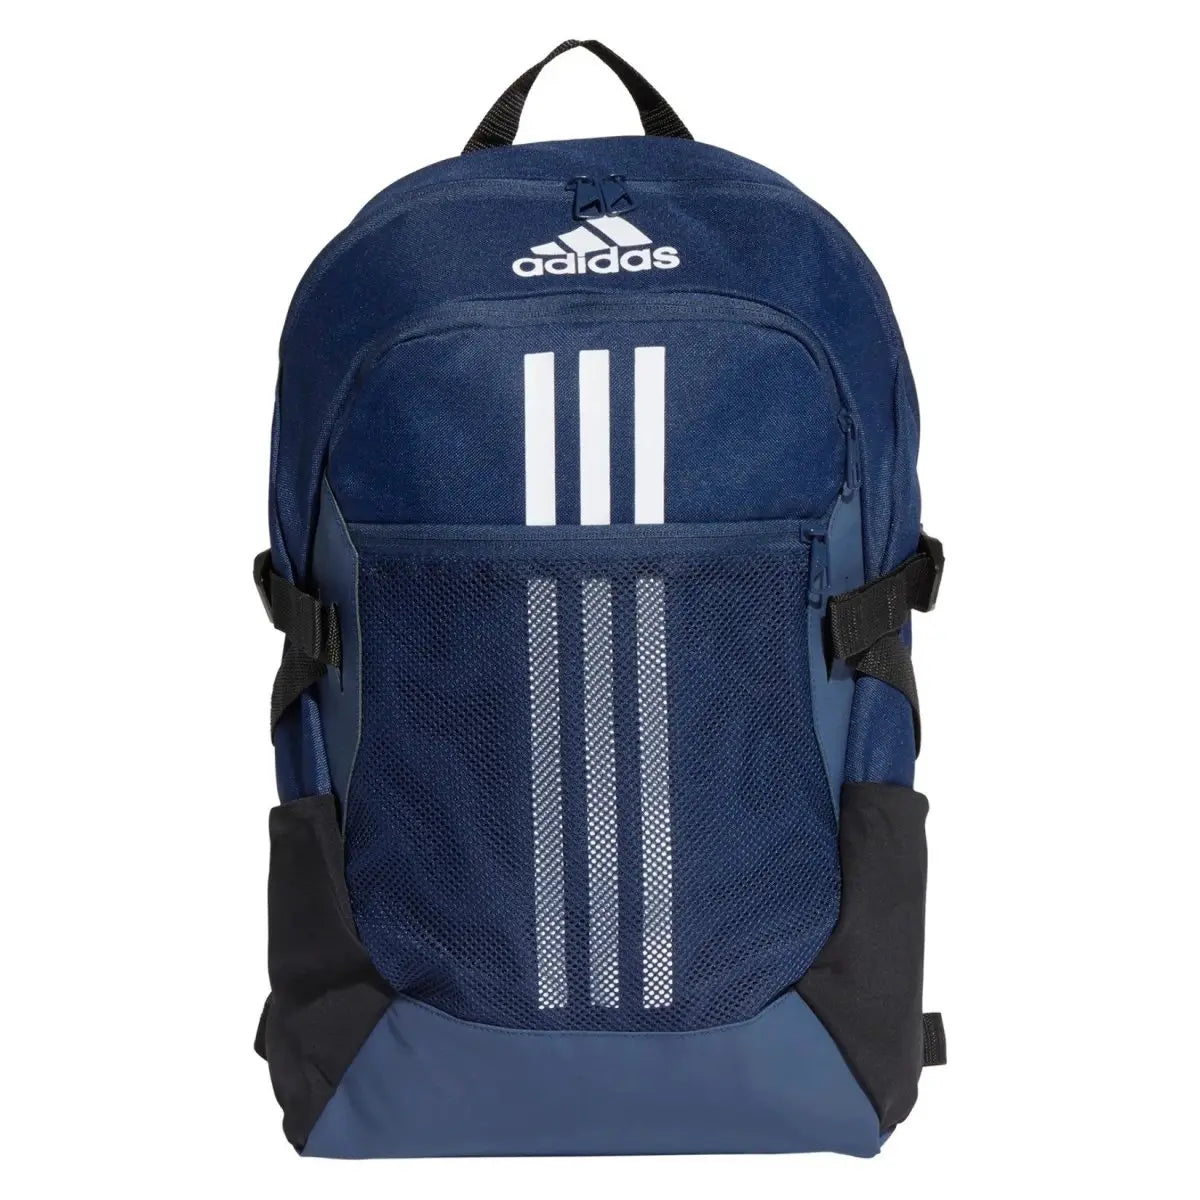 Adidas Tiro Backpack - Black Adidas